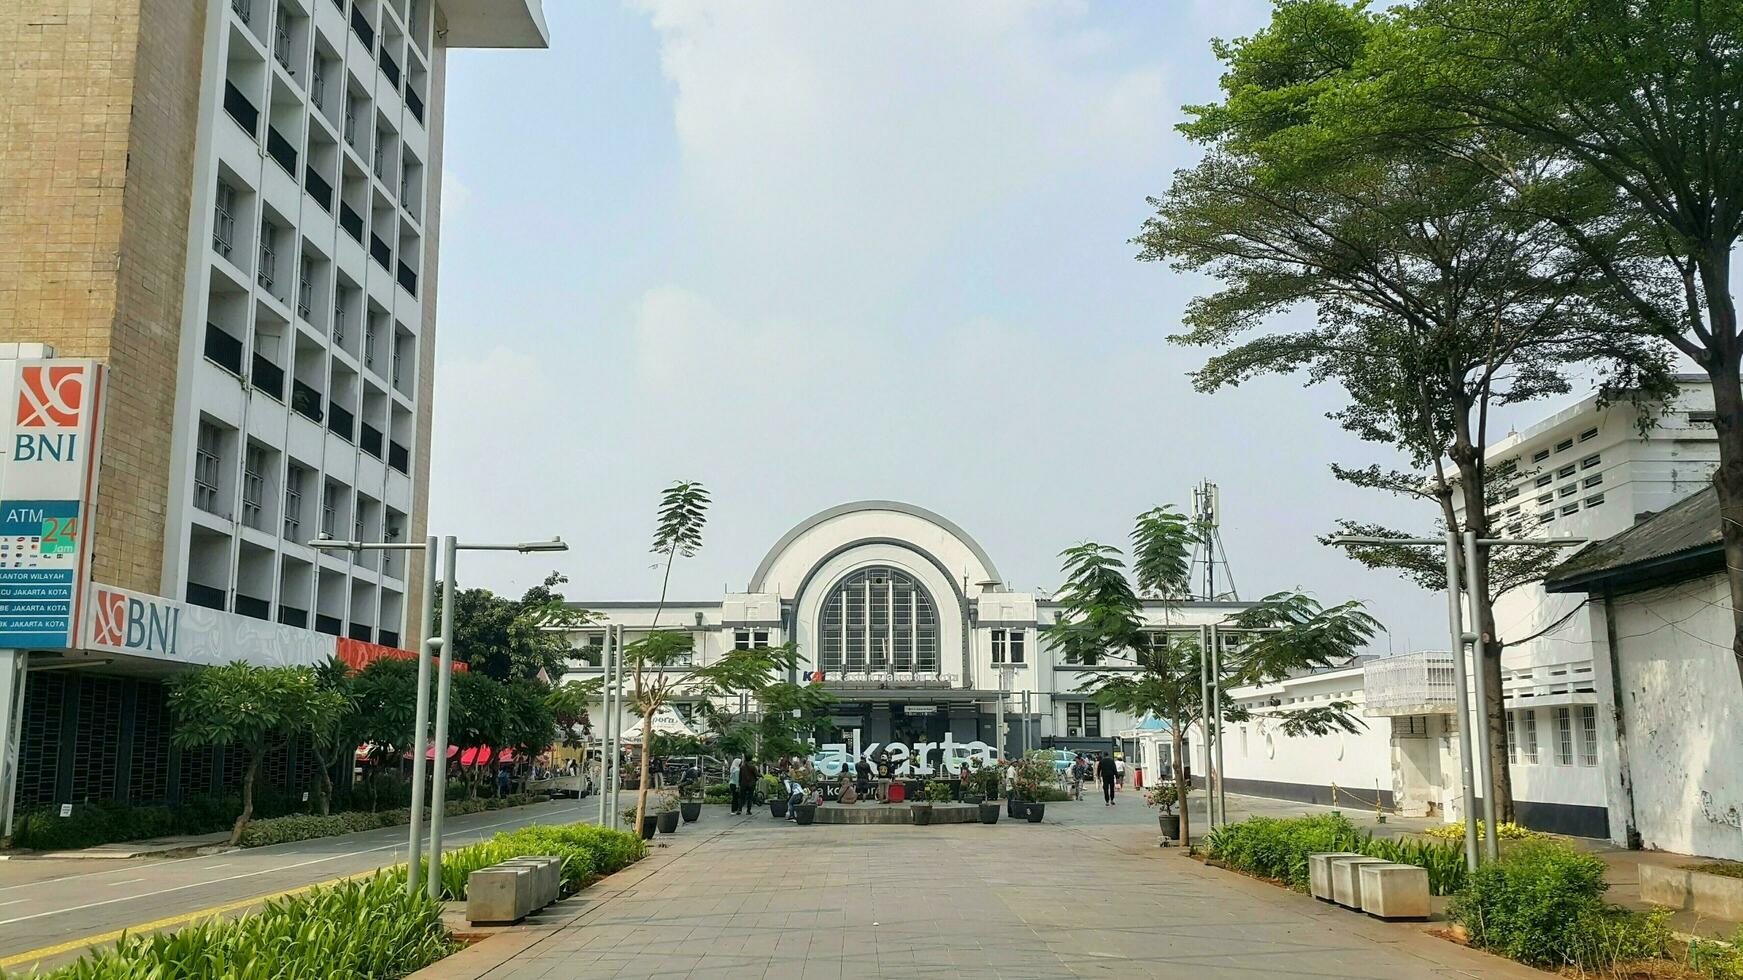 Jakarta Kota railway station, the old station in Jakarta. Jakarta Old Town or Kota Tua is a famous tourist destination. photo